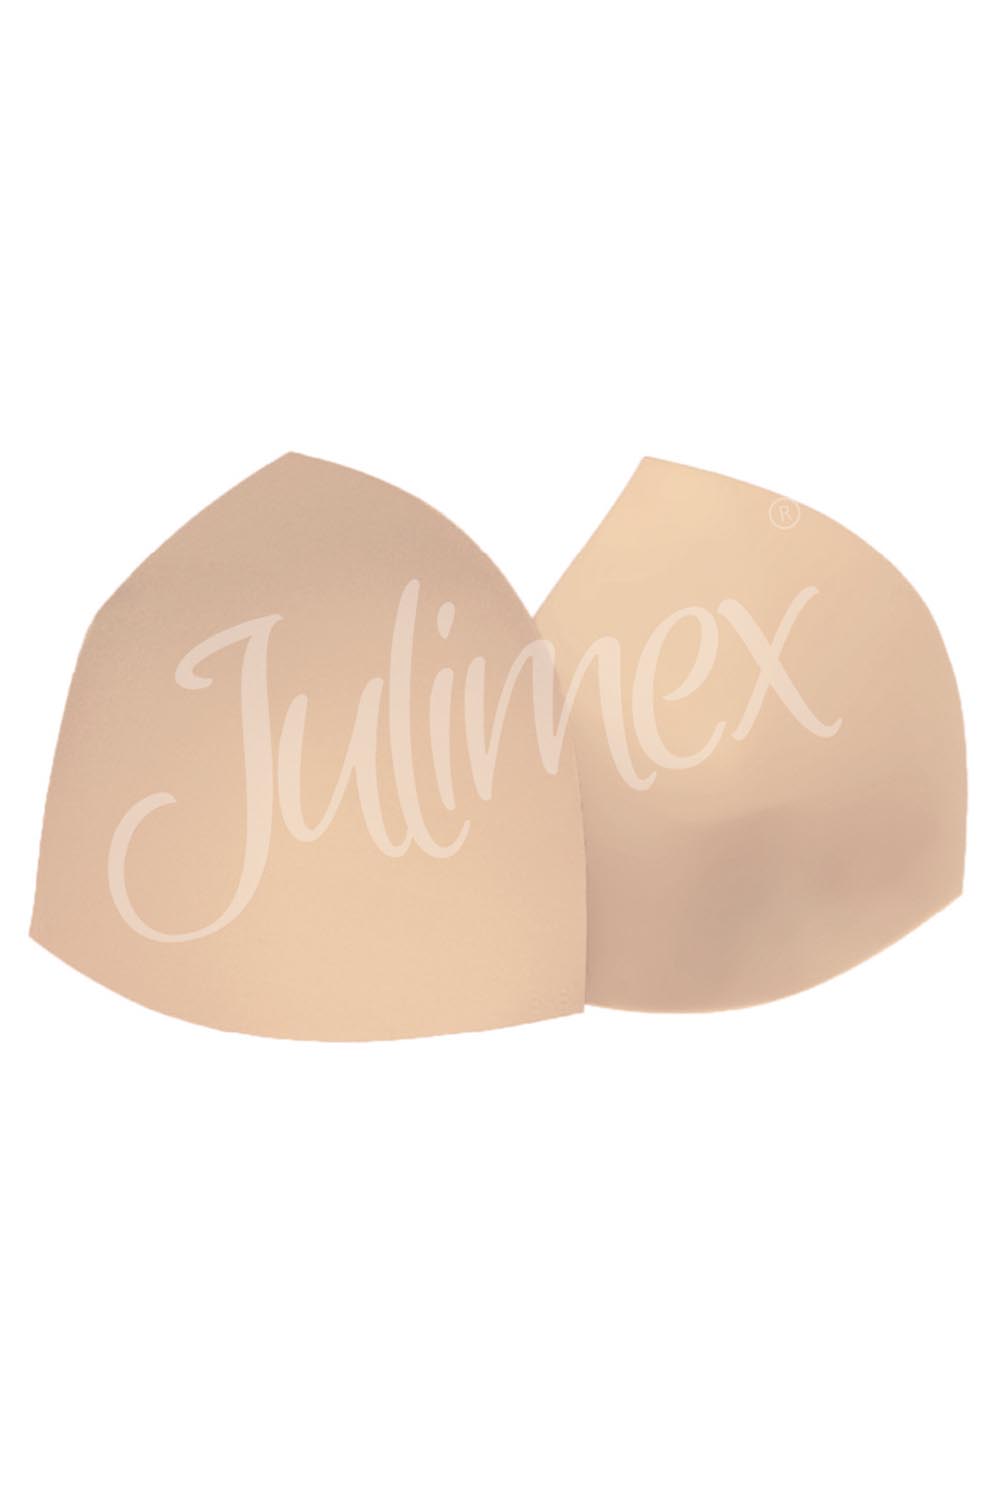 Julimex WS-11 Wkadki bikini Akcesoria do biustonosza wkadki, be